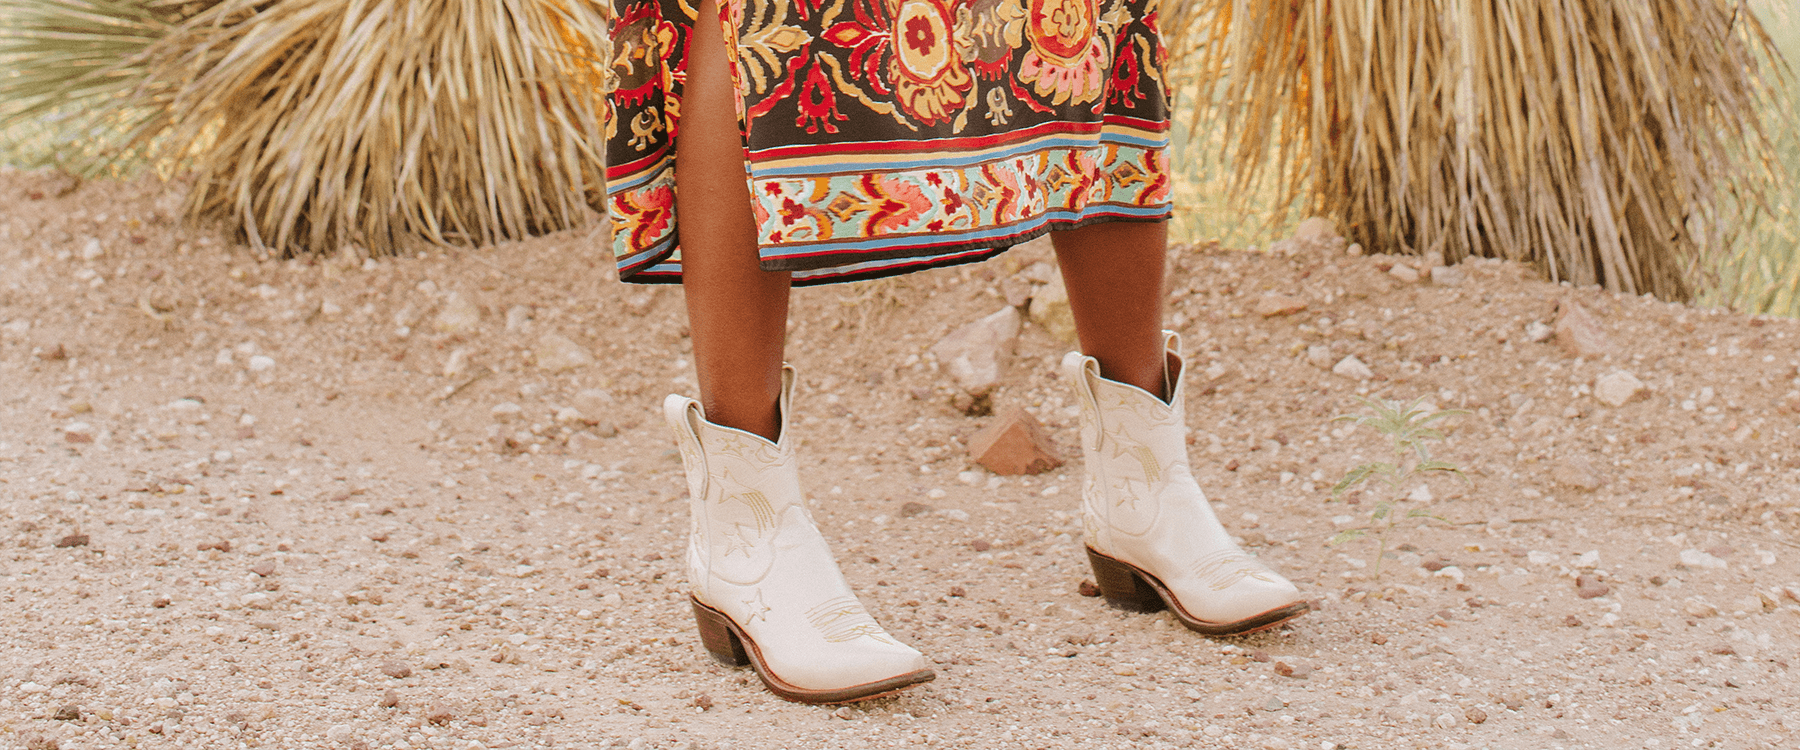 Women's Shorty Luxury Fashion Cowboy Boots | Miron Crosby